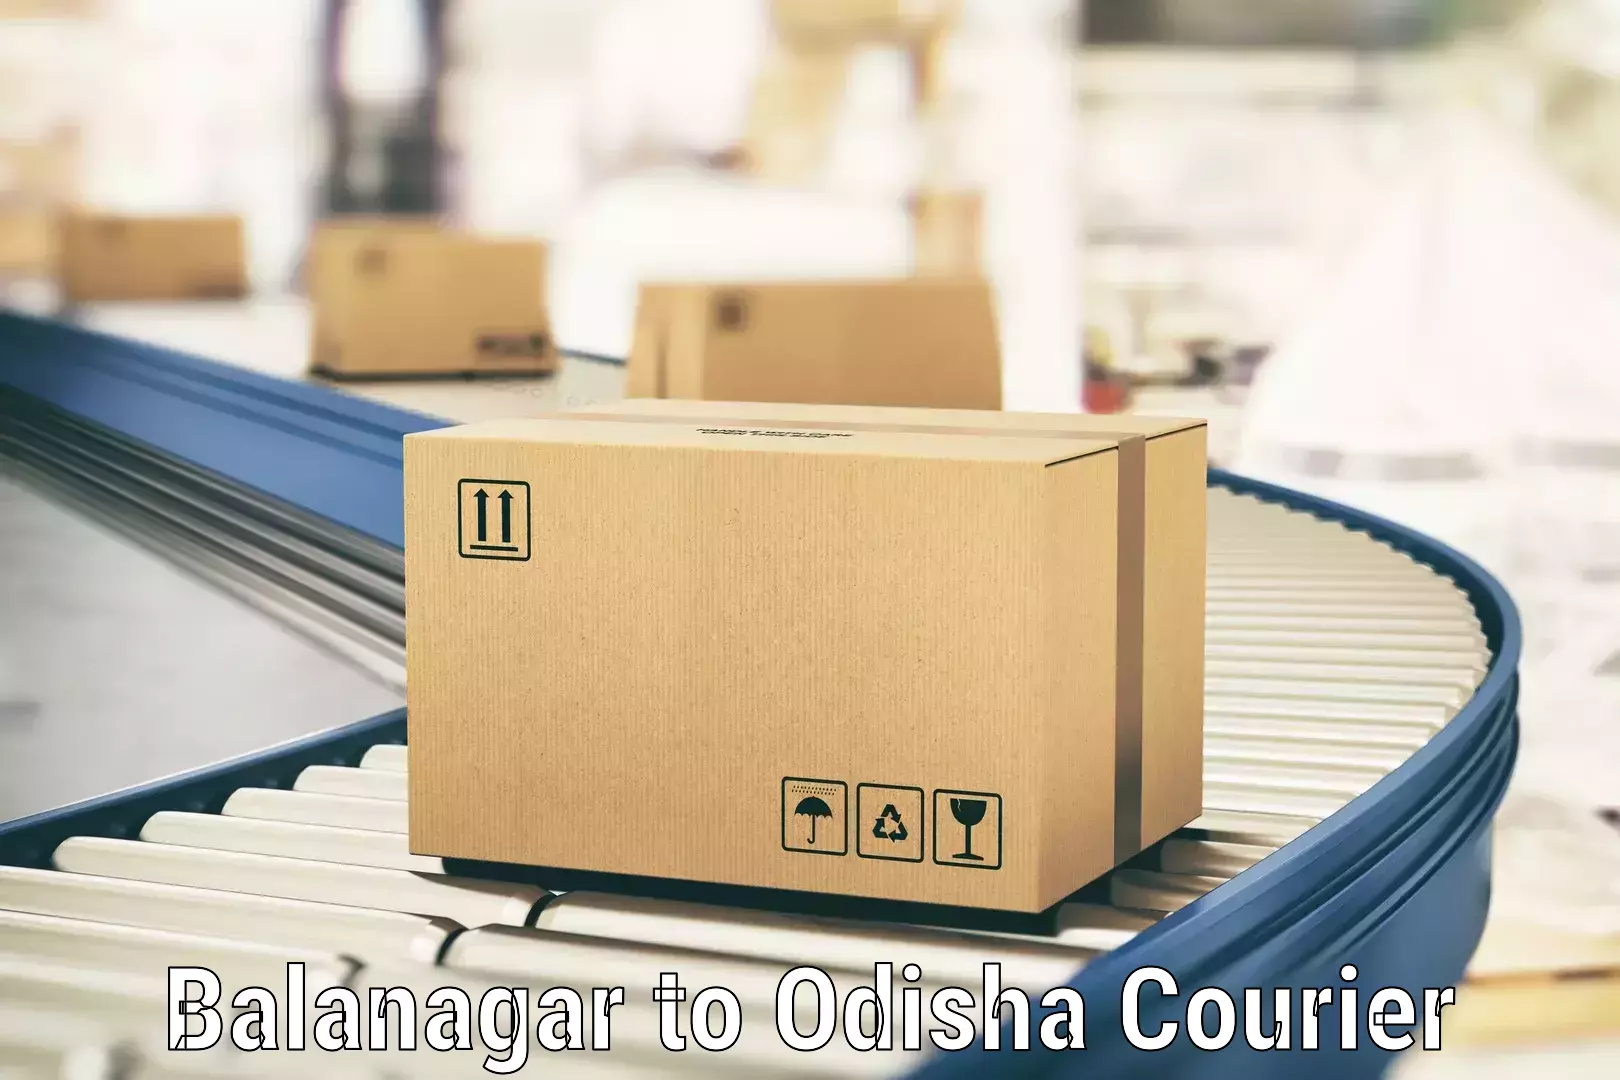 Customer-oriented courier services Balanagar to Sambalpur